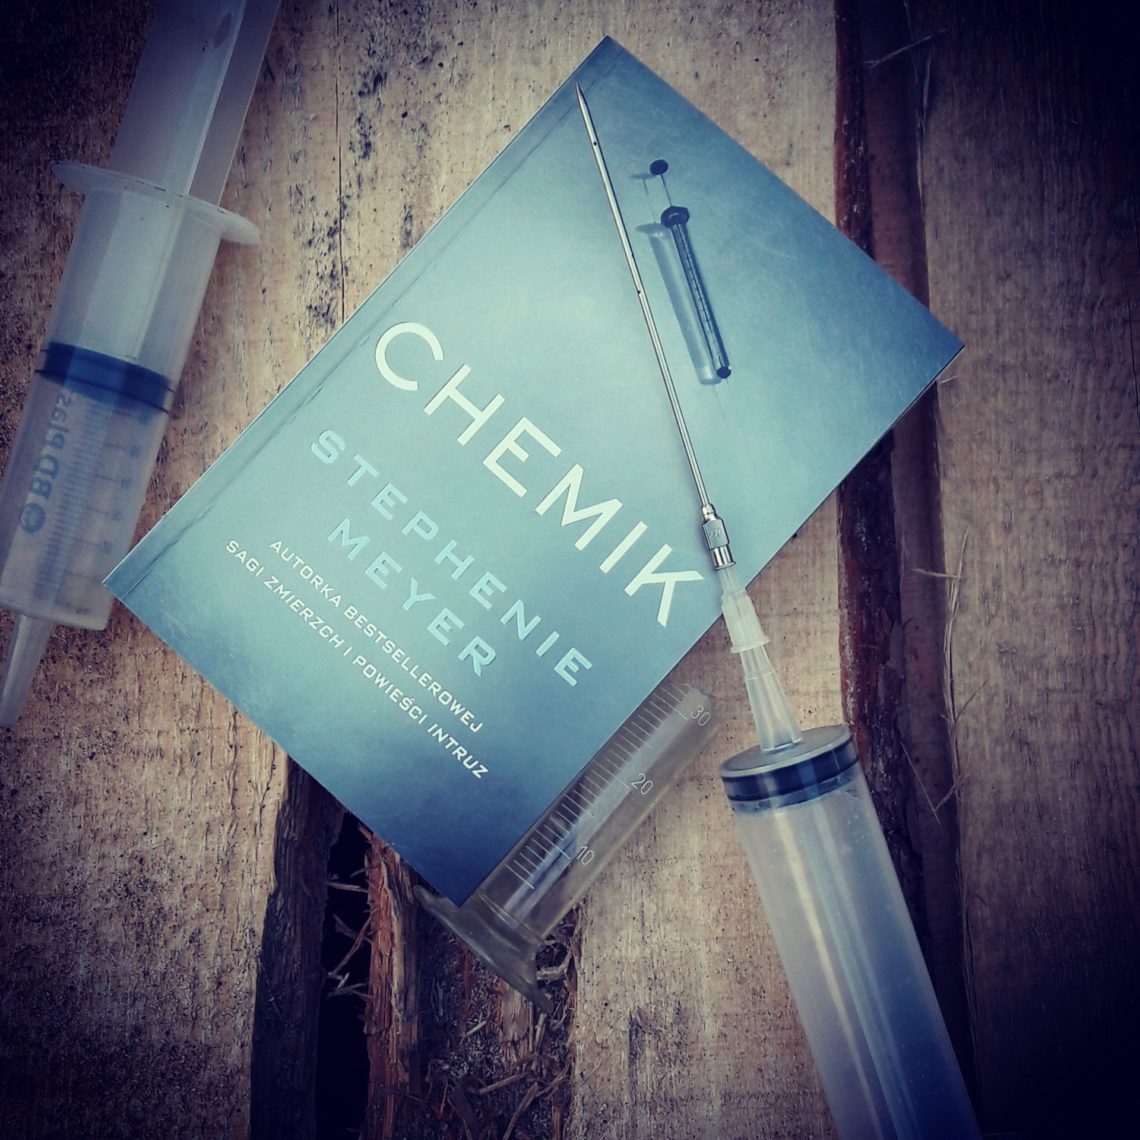 "Chemik" - Stephenie Meyer